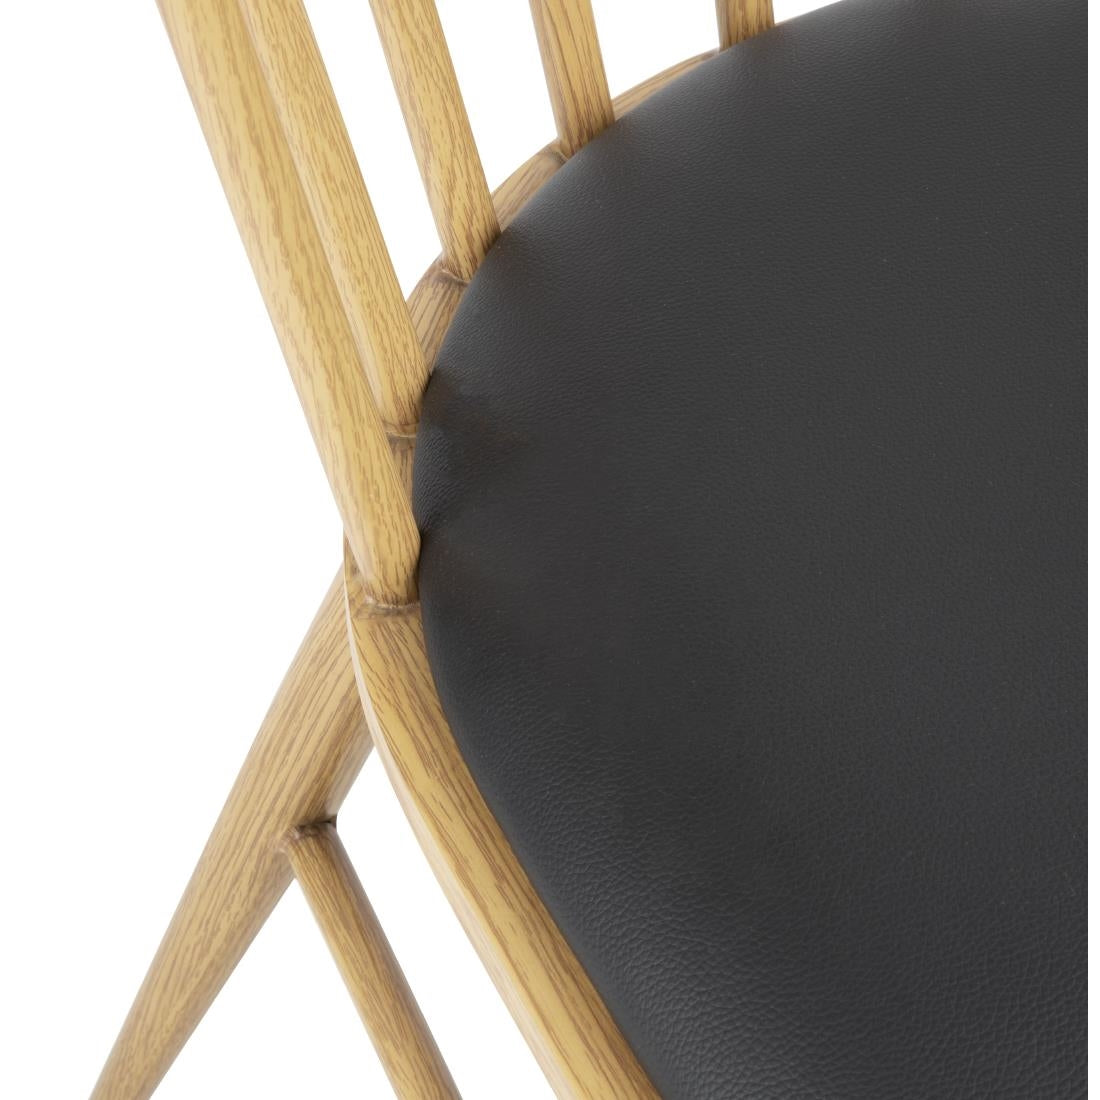 FU528 Bolero Harrowdene Padded Metal Side Chairs Wood Effect (Pack of 2)